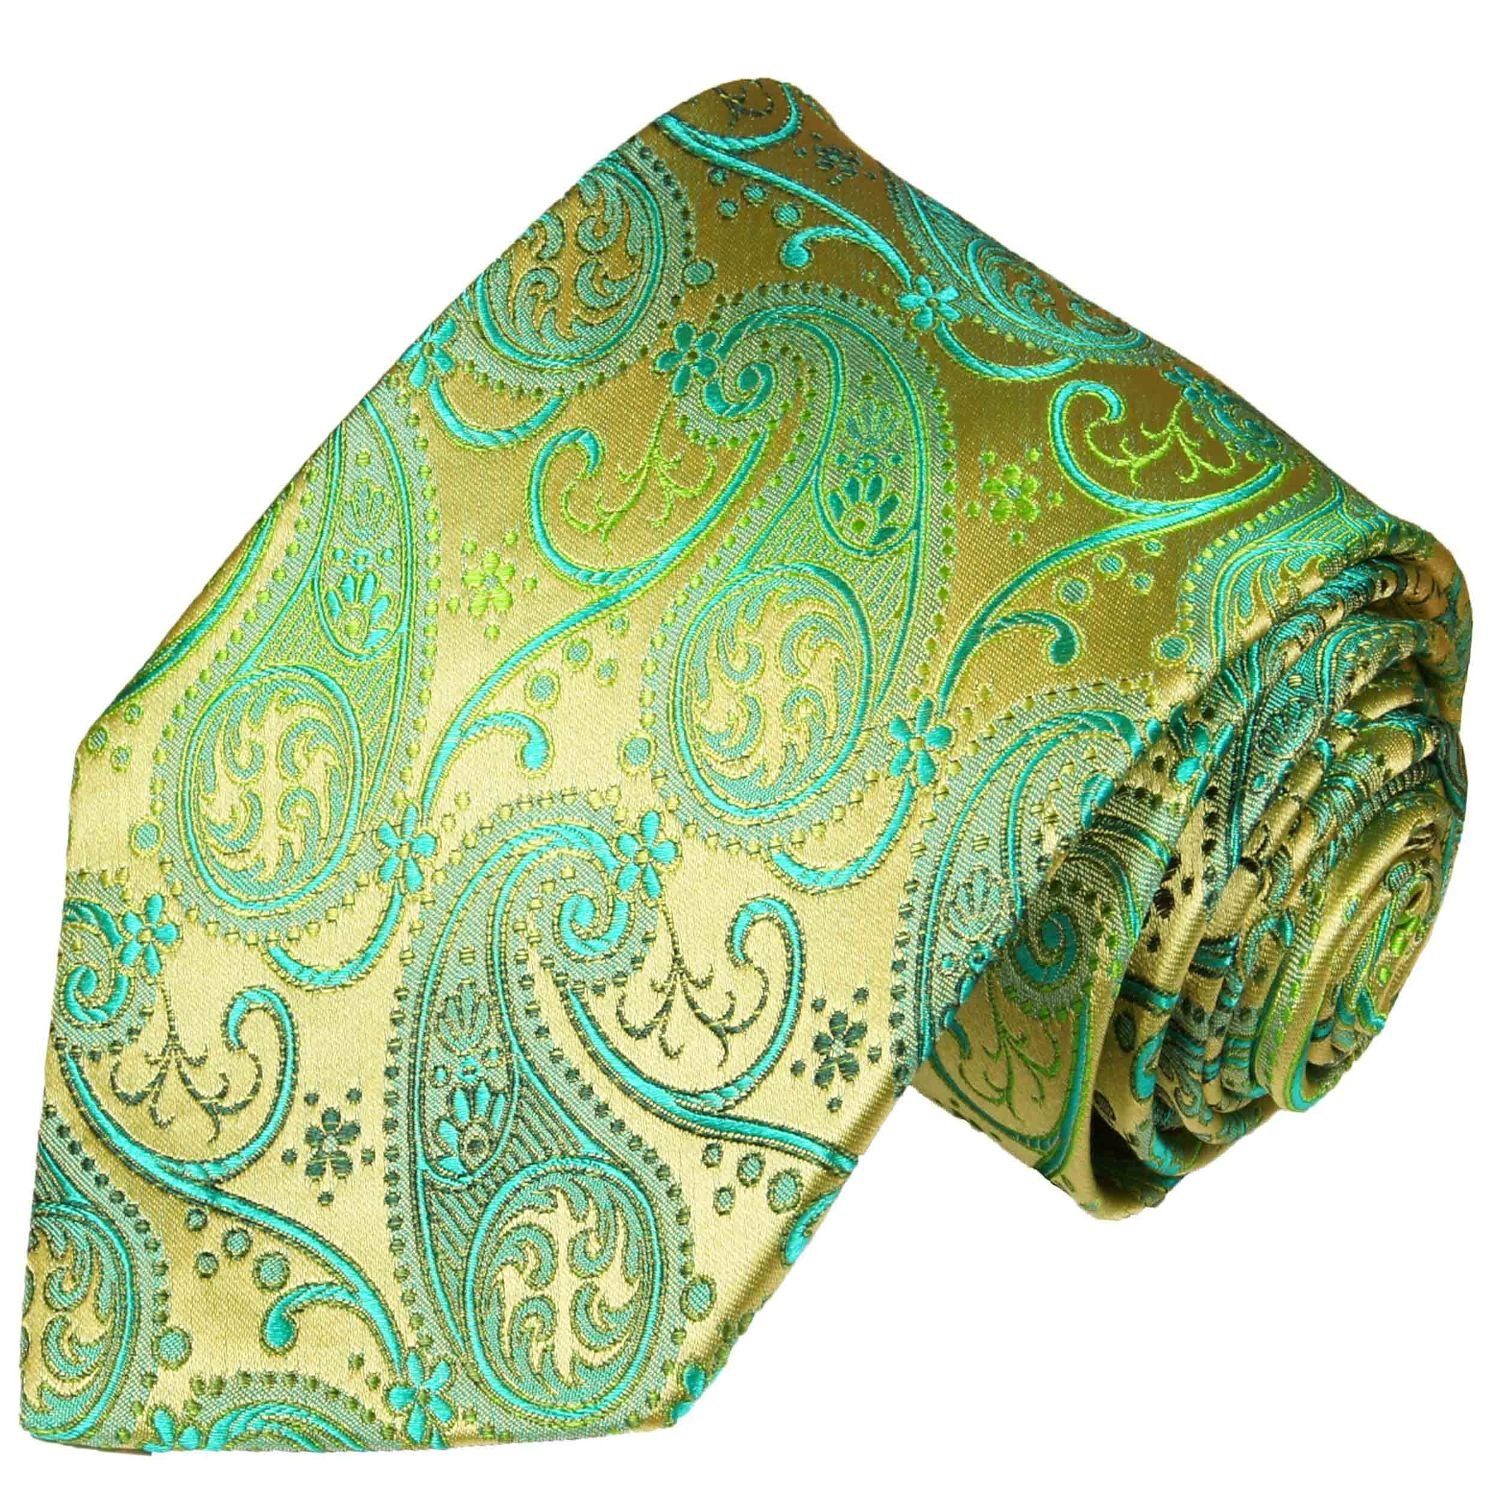 Paul Malone Krawatte Elegante Seidenkrawatte Herren Schlips paisley brokat 100% Seide Schmal (6cm), Extra lang (165cm), gold grün 817 | Breite Krawatten